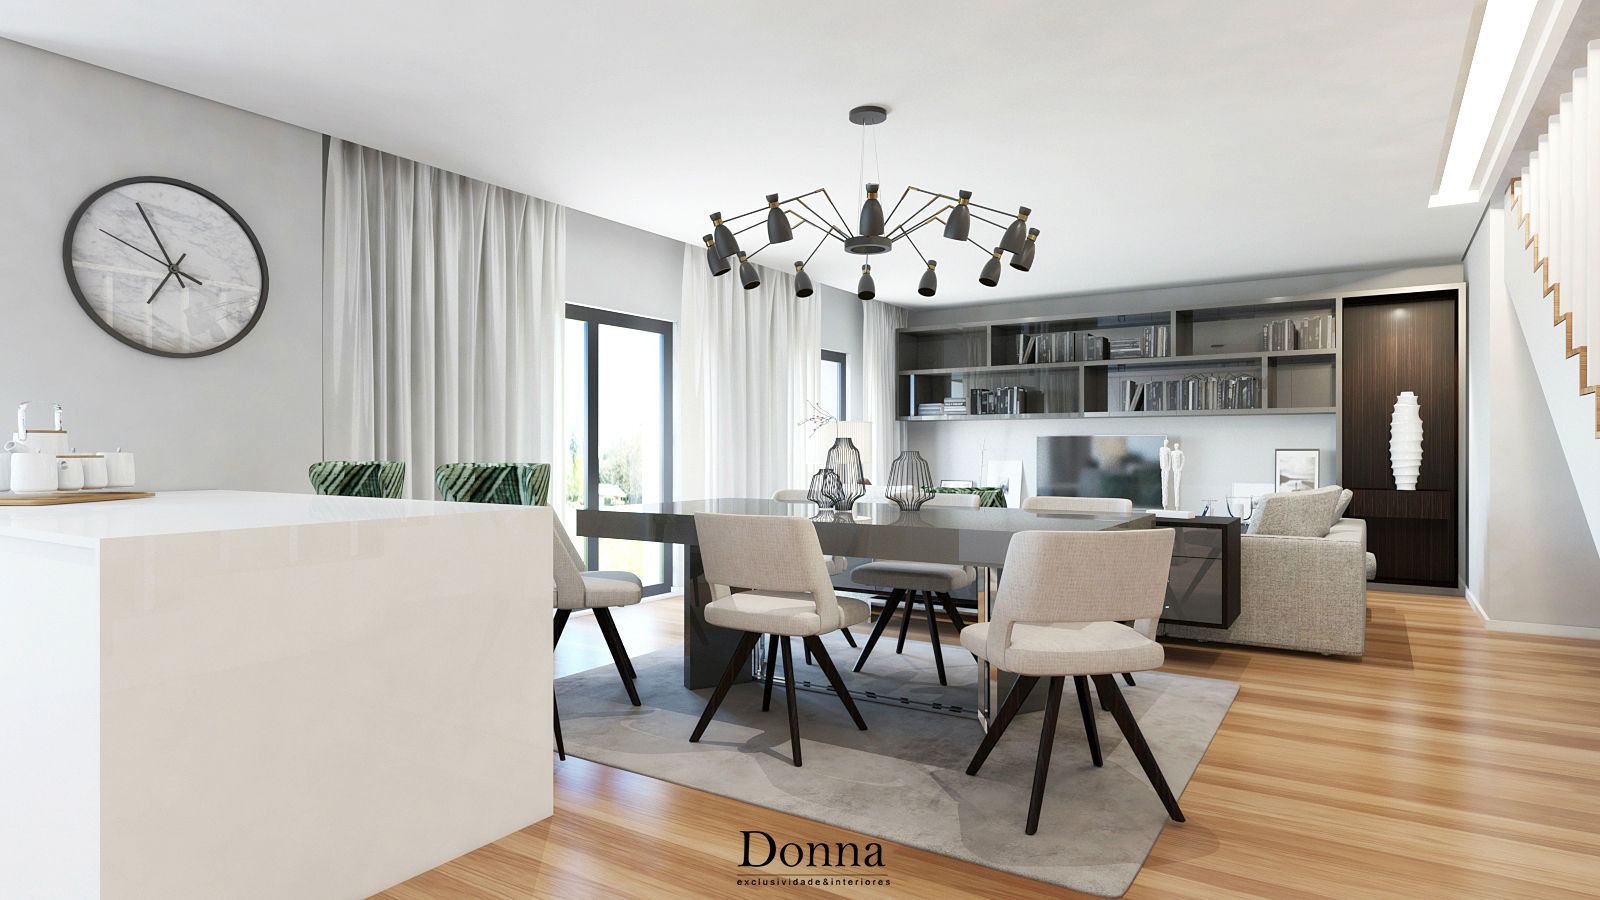 Apartamento Duplex no Porto, Donna - Exclusividade e Design Donna - Exclusividade e Design Modern dining room Dressers & sideboards